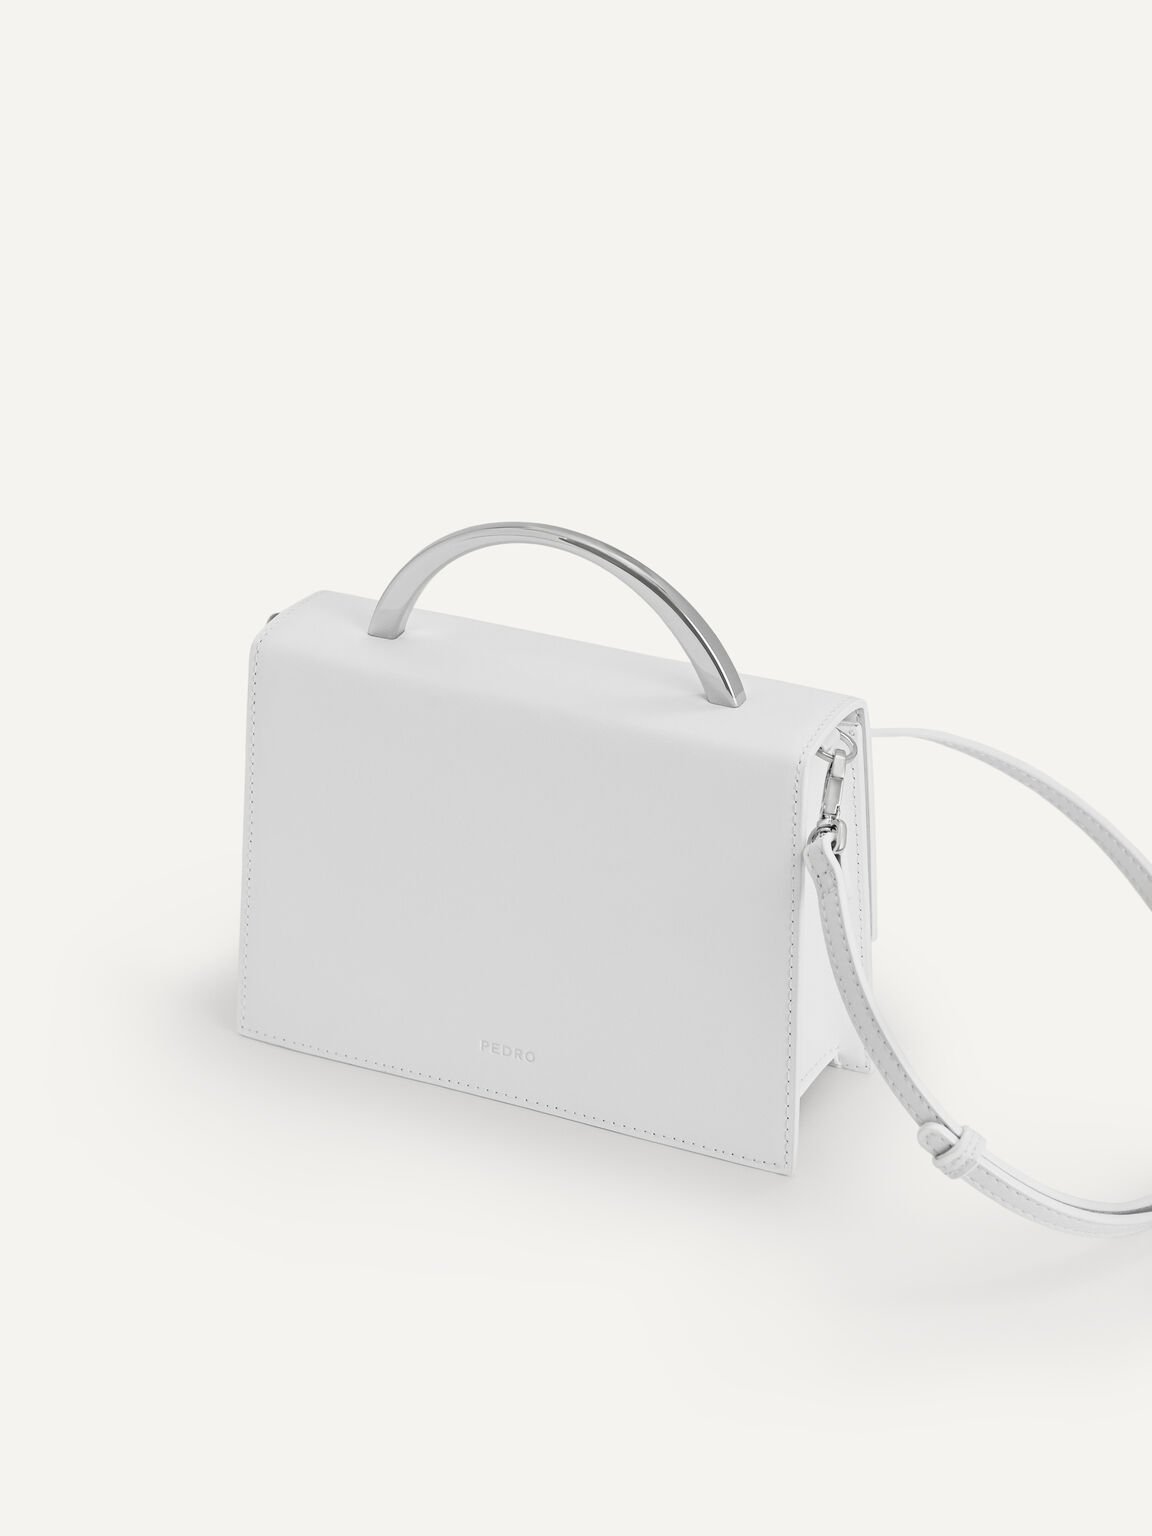 Artemis Leather Top Handle Bag, White